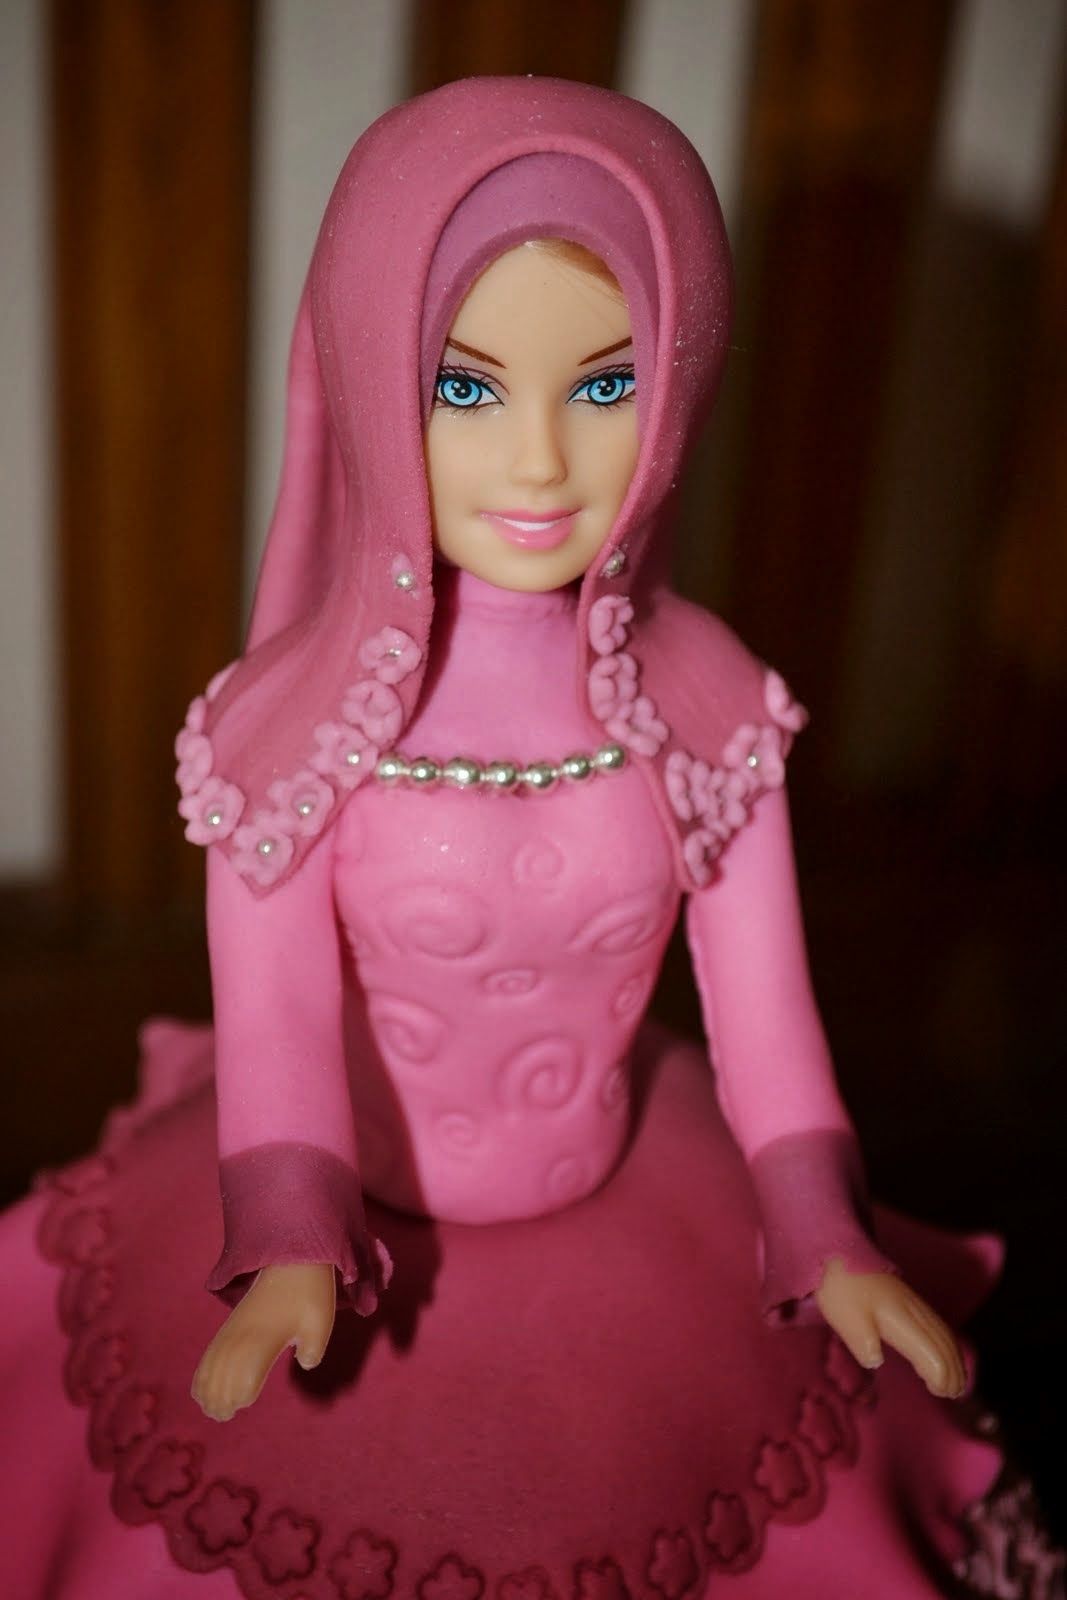 Kumpulan Gambar Boneka Barbie Muslim Cantik Dan Keren Untuk Anak